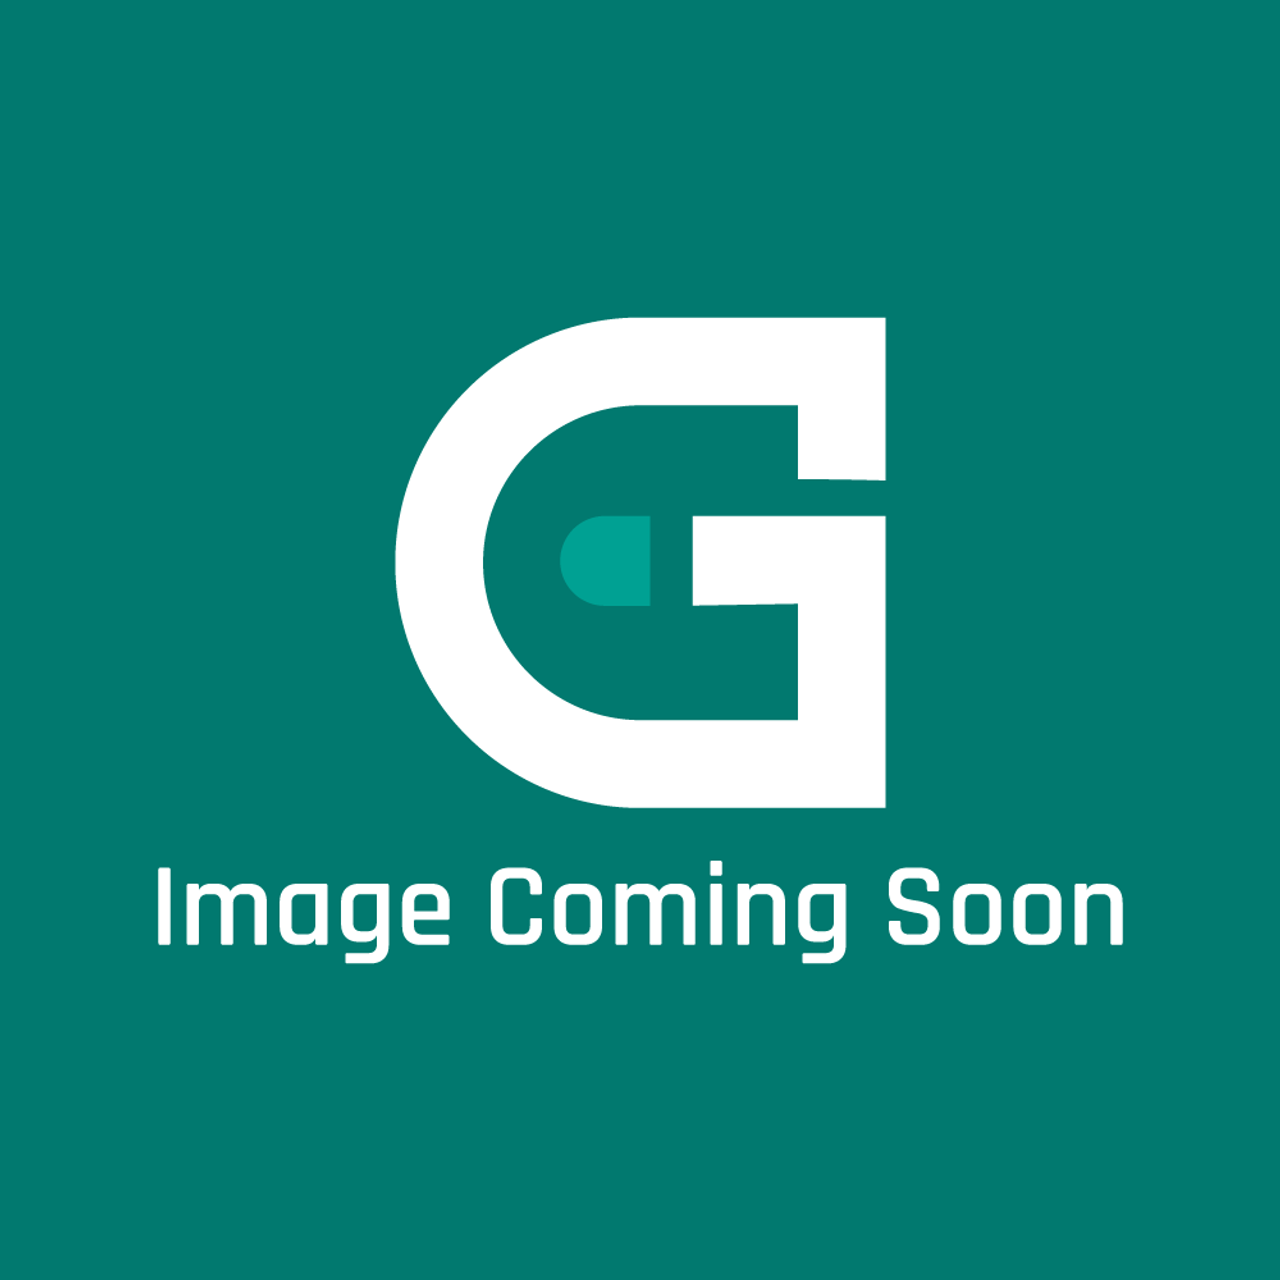 AGA Marvel RO4F321277 - Firebrick - Firebox Top 360K/D - Image Coming Soon!